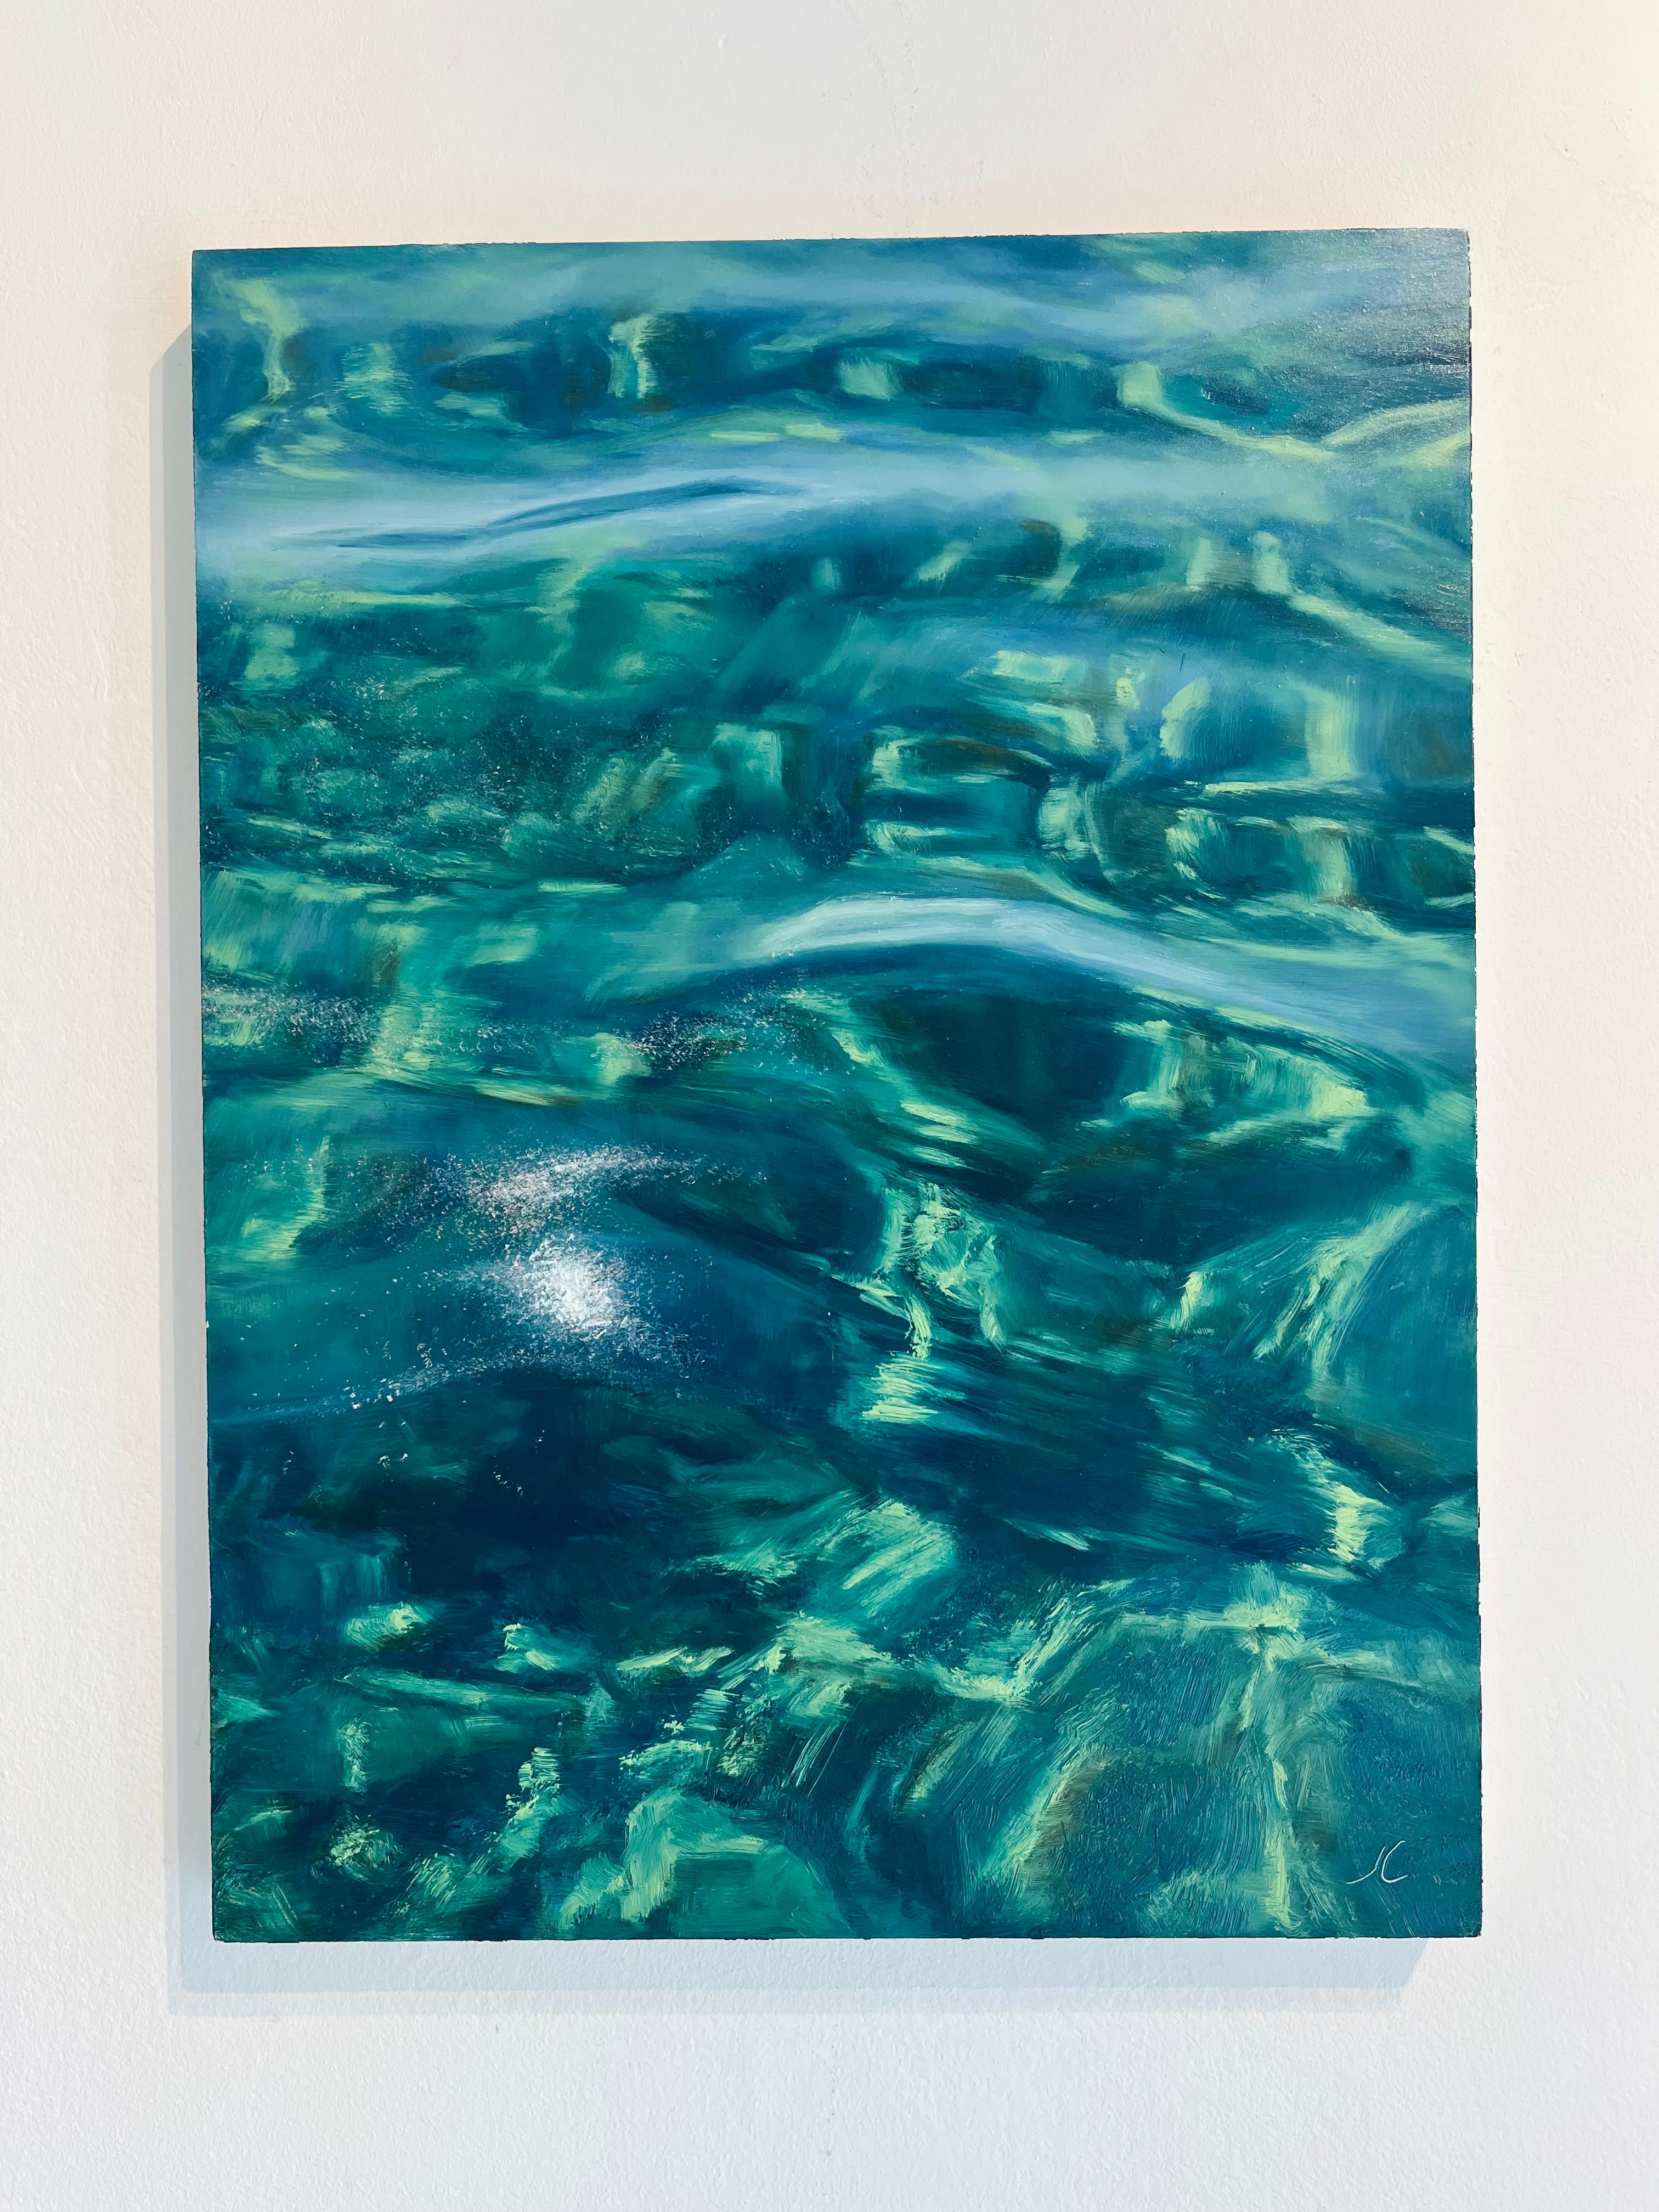 Irina Cumberland Landscape Painting - Meditation on Water IIII - ocean pattern original oil painting seascape reaslism